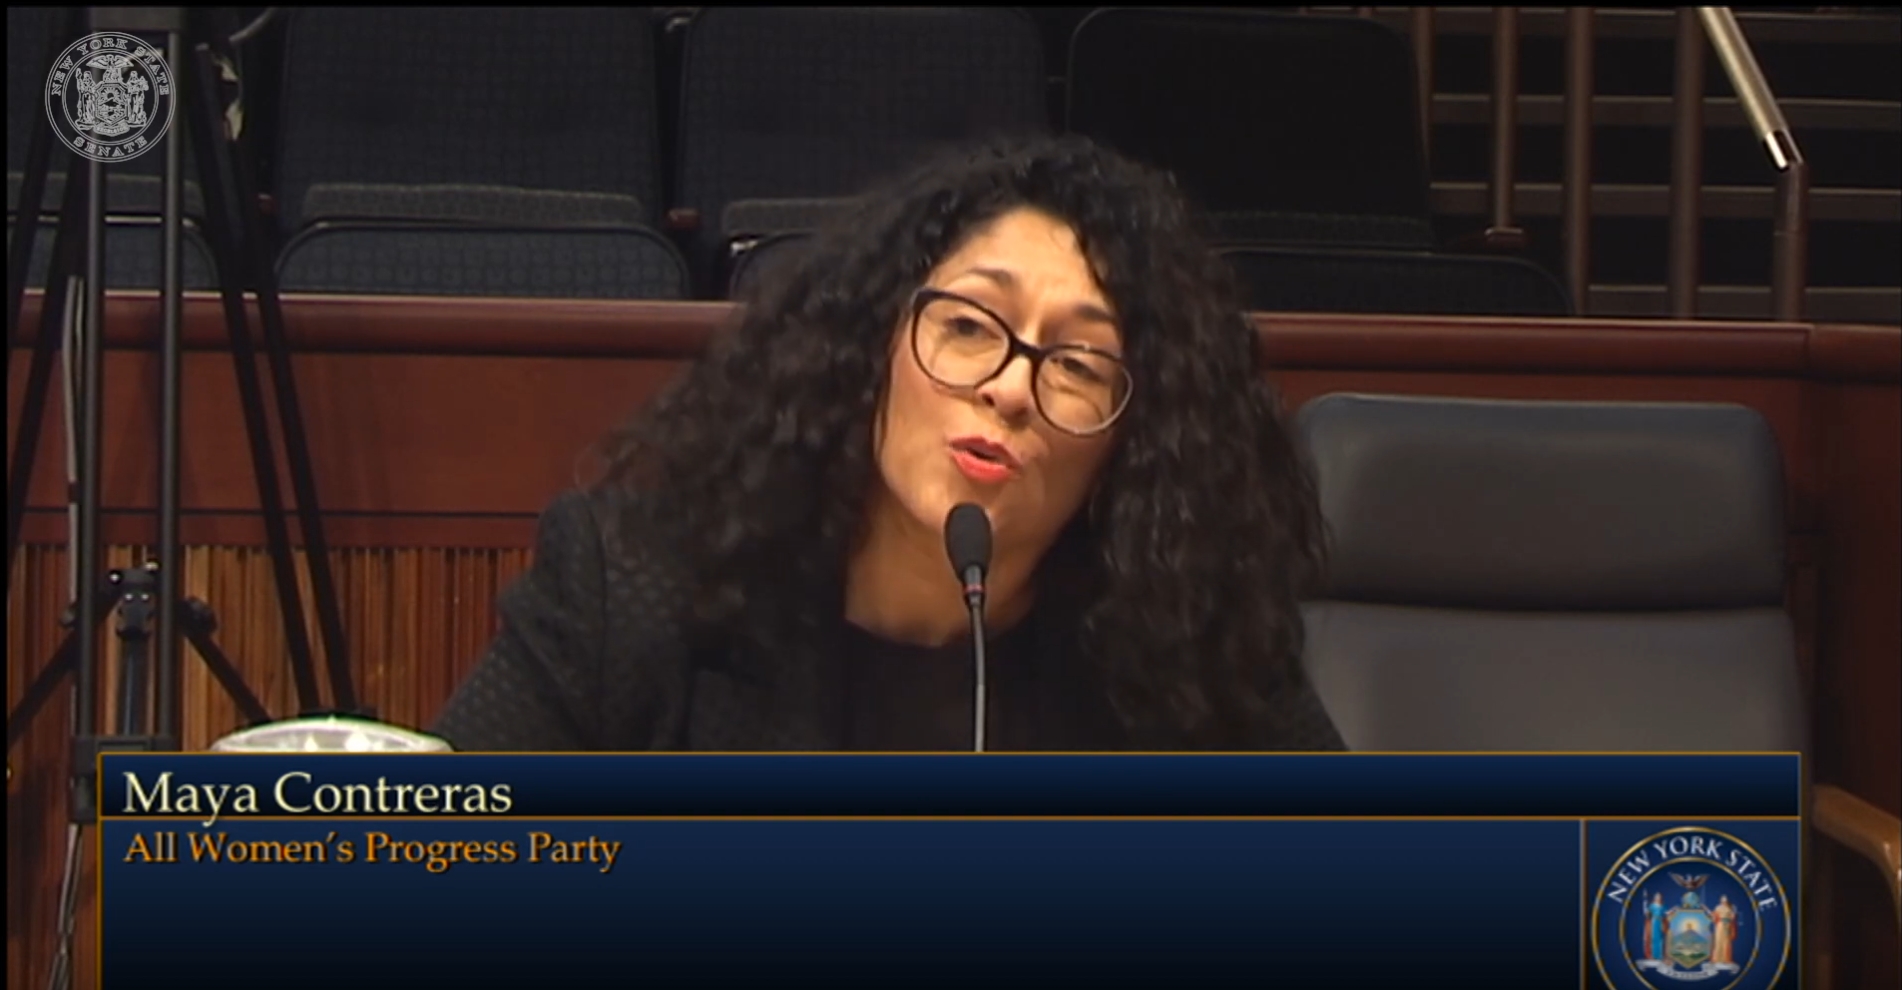 Woman speaking at microphone in legislative chambers